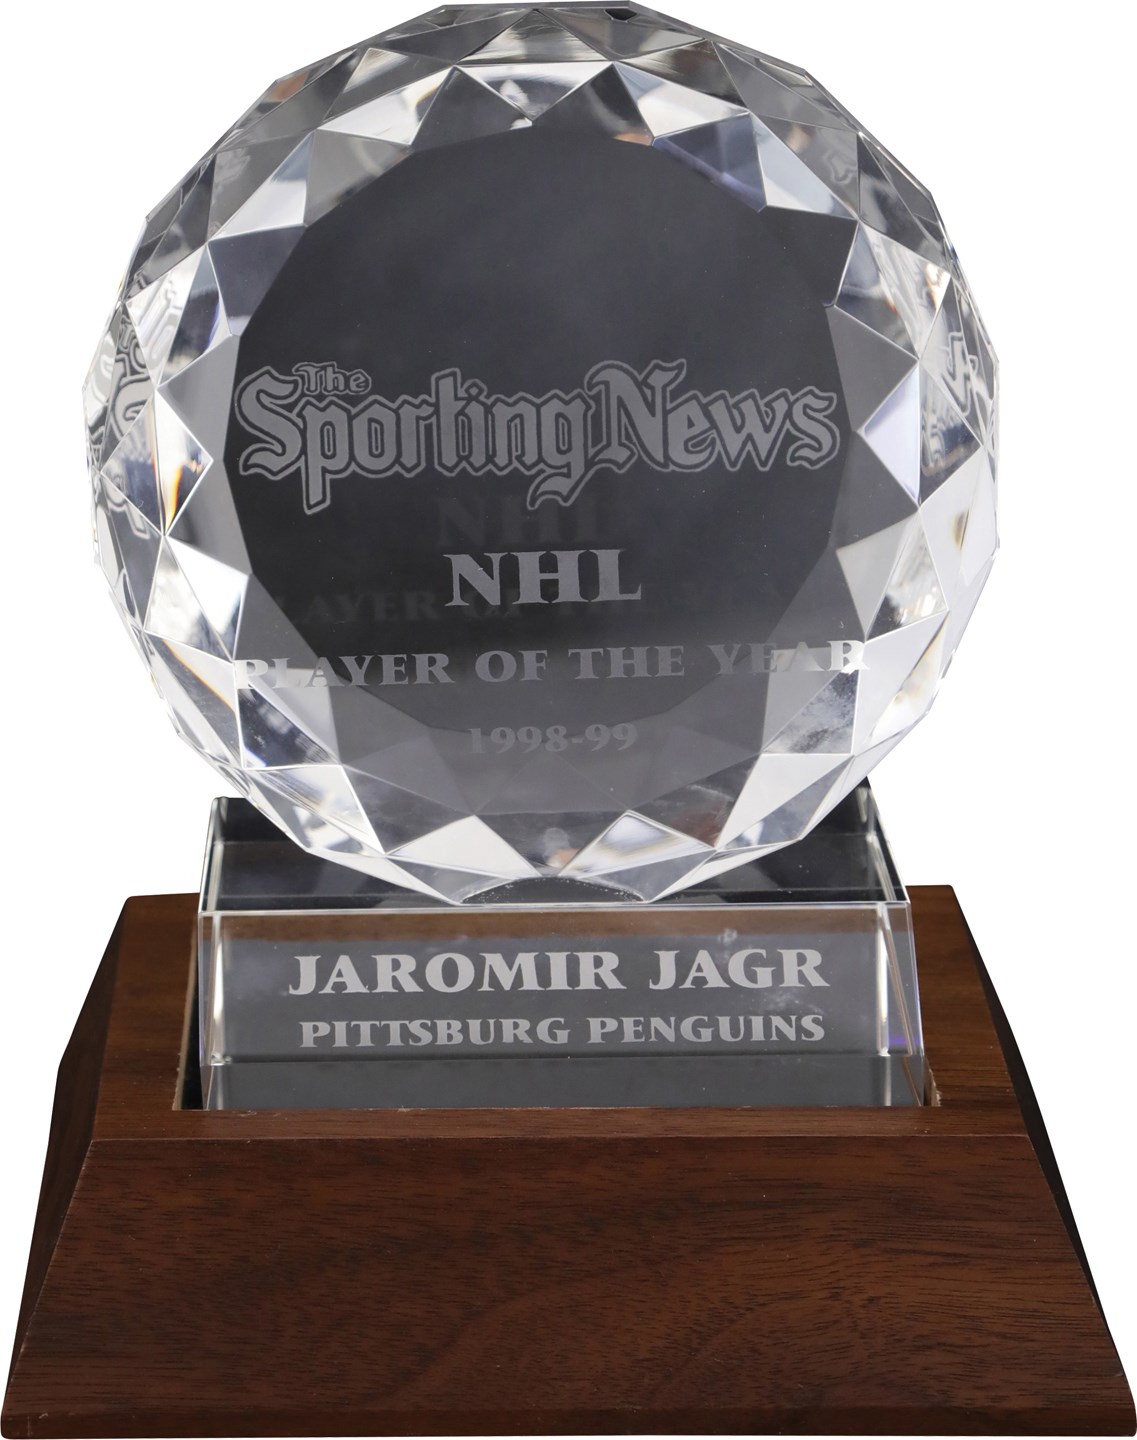 - 1998-99 Jaromir Jagr Sporting News NHL Player of the Year Award